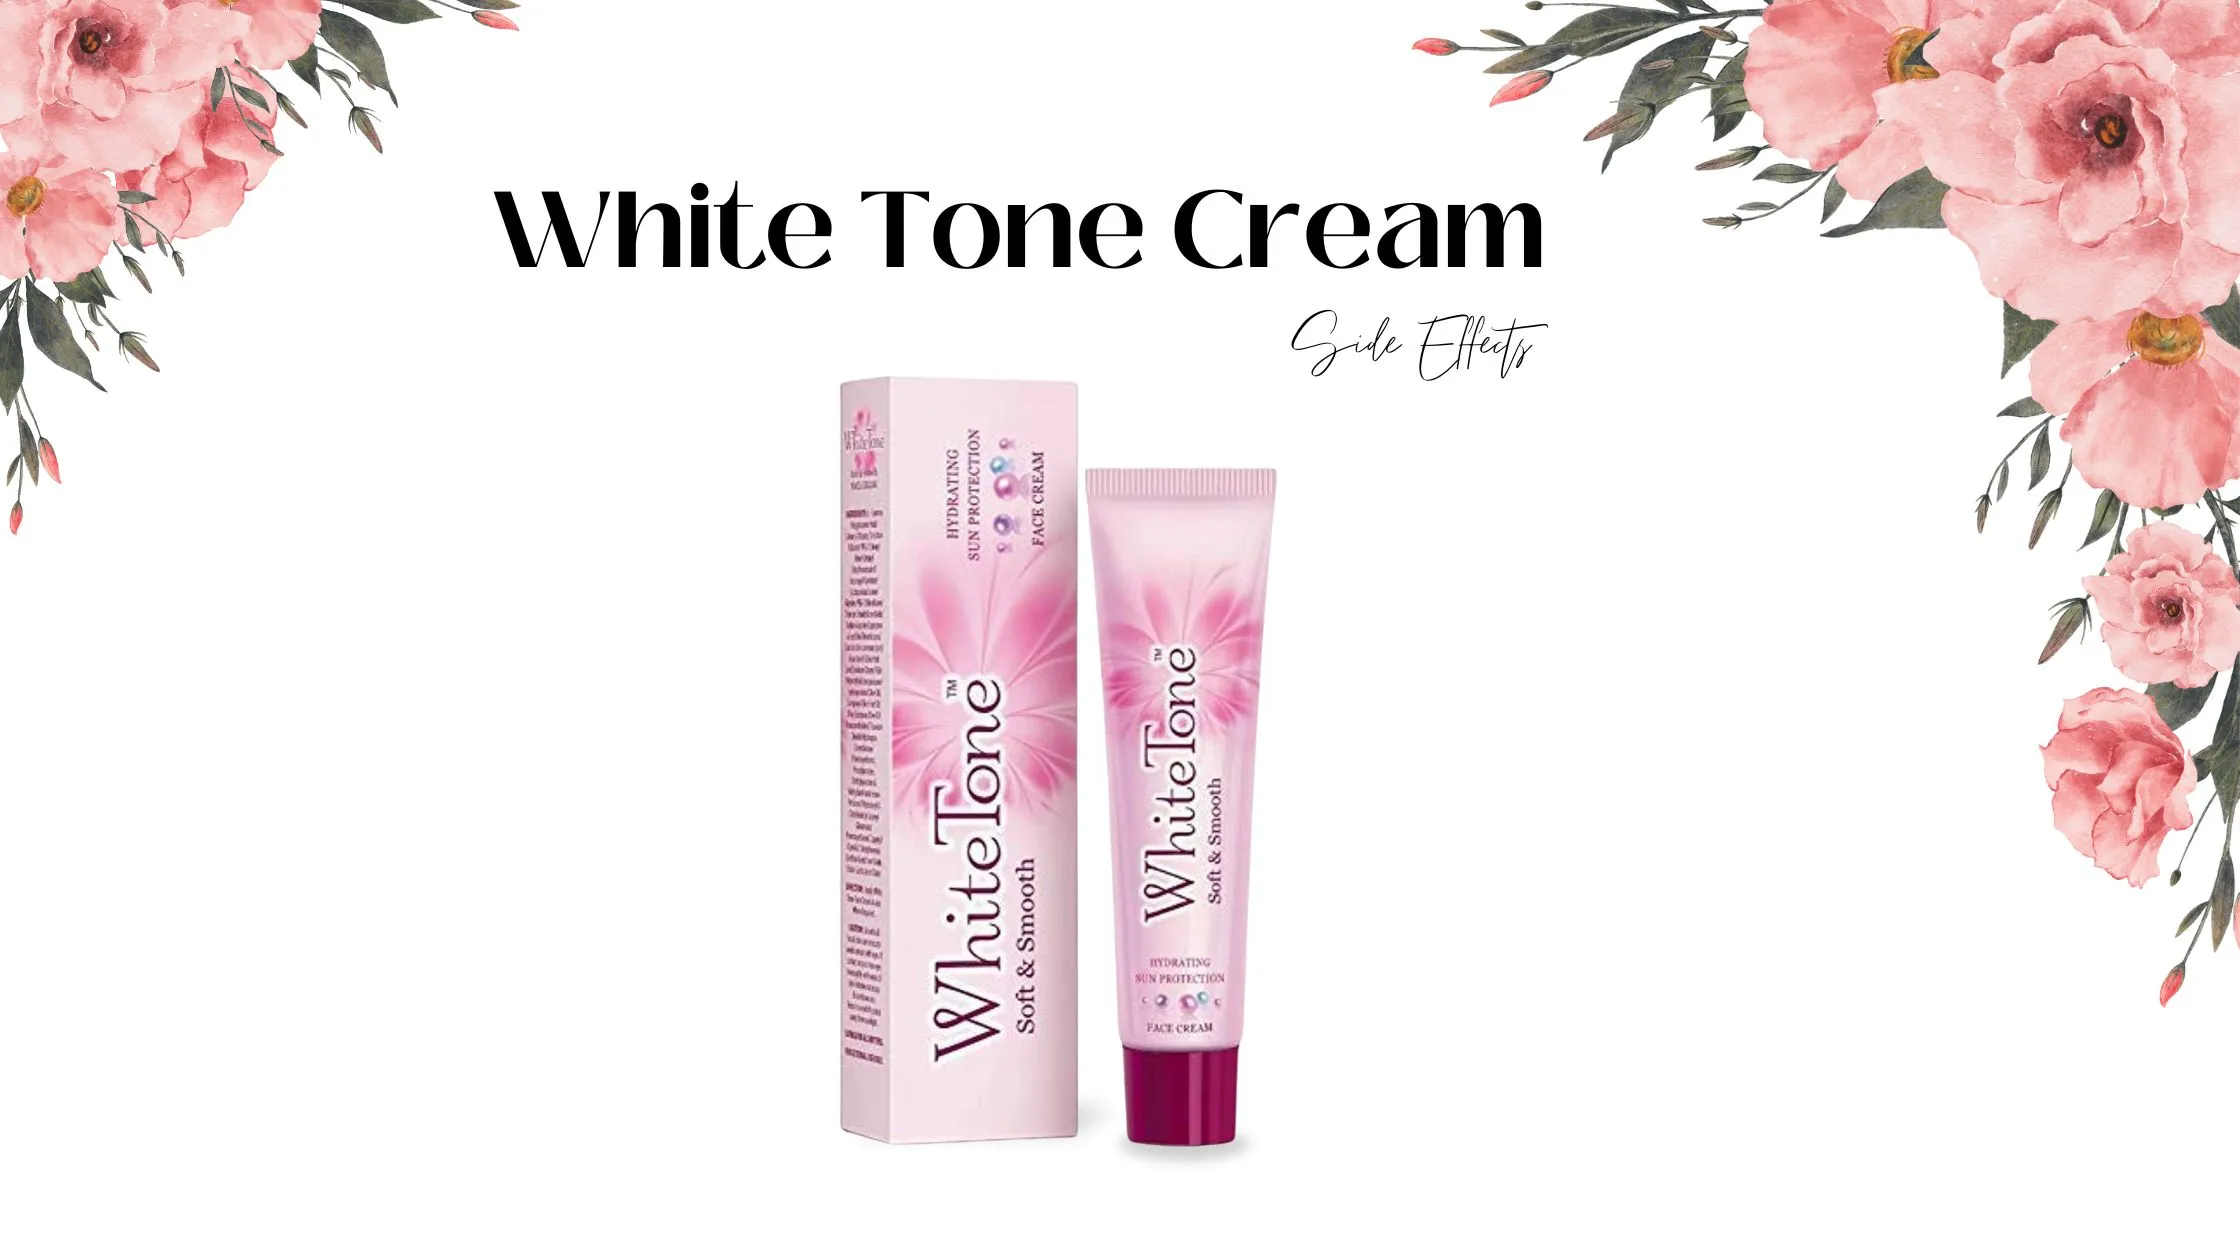 White Tone Cream Side Effects